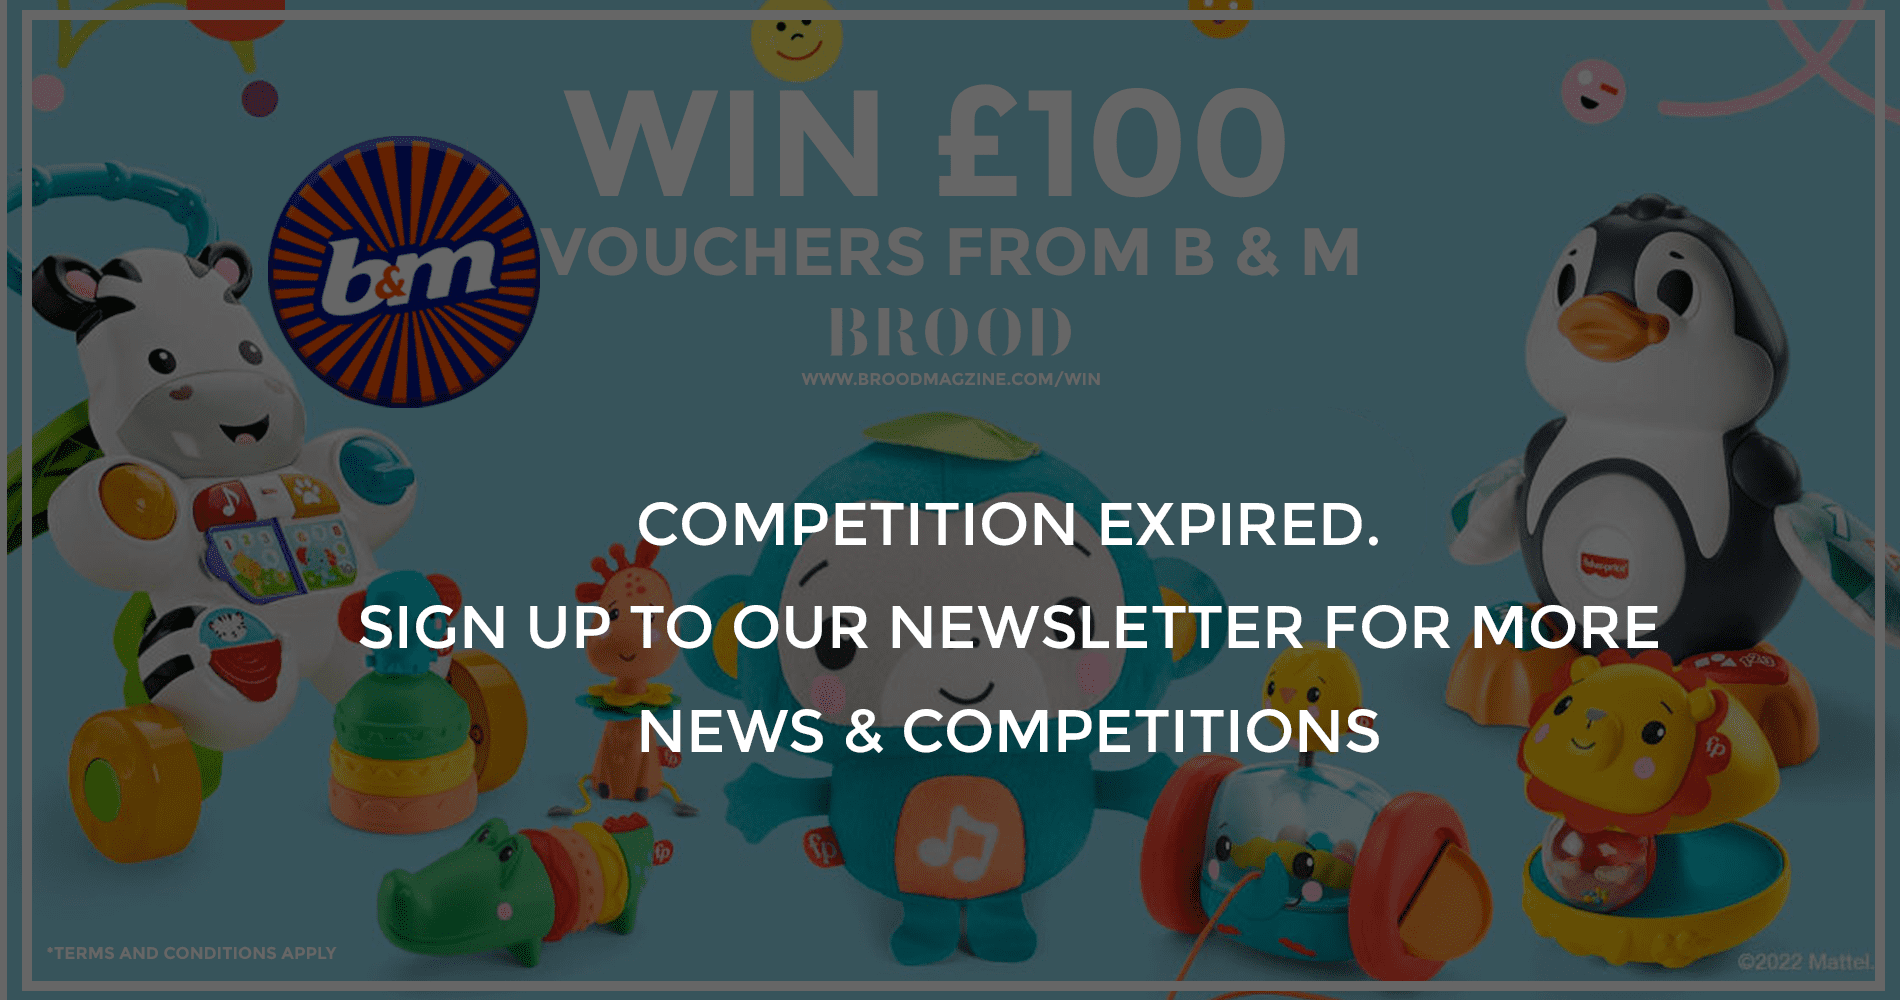 win £100 b & m vouchers with Brood & B & M